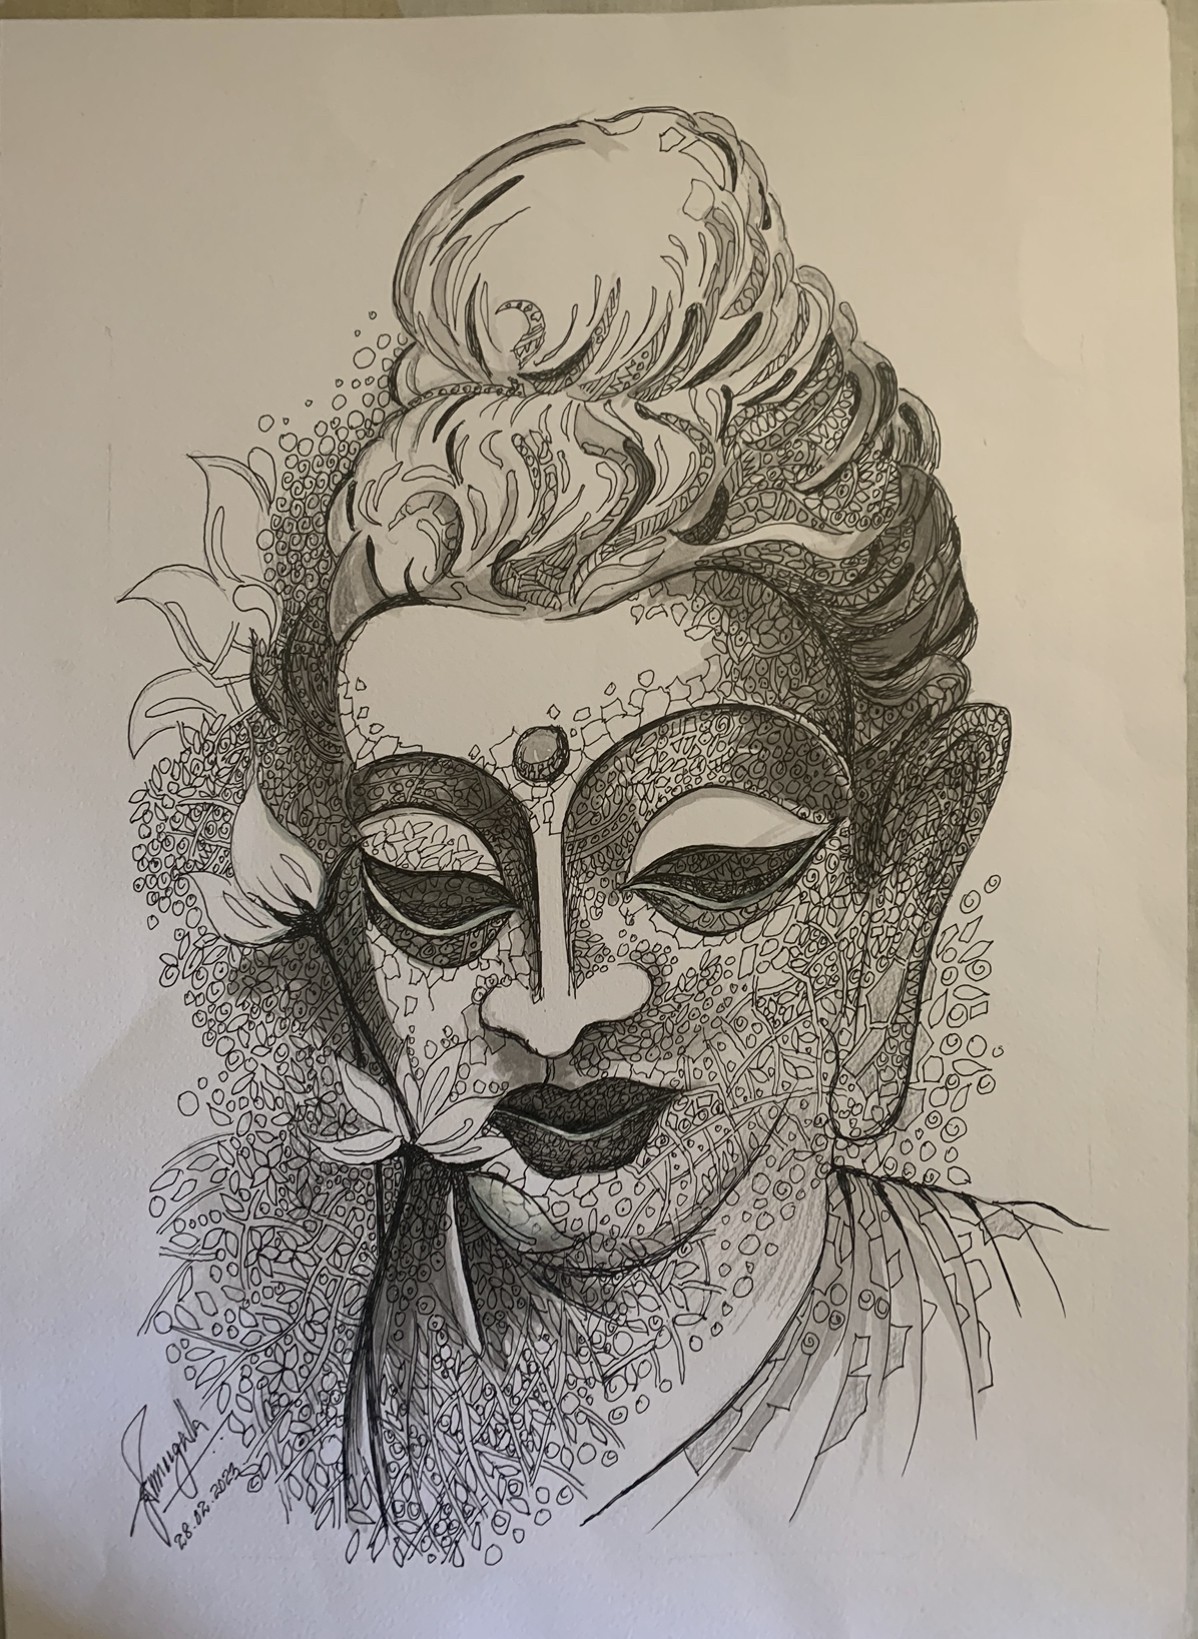 Nirwana by Gamini Meegalla